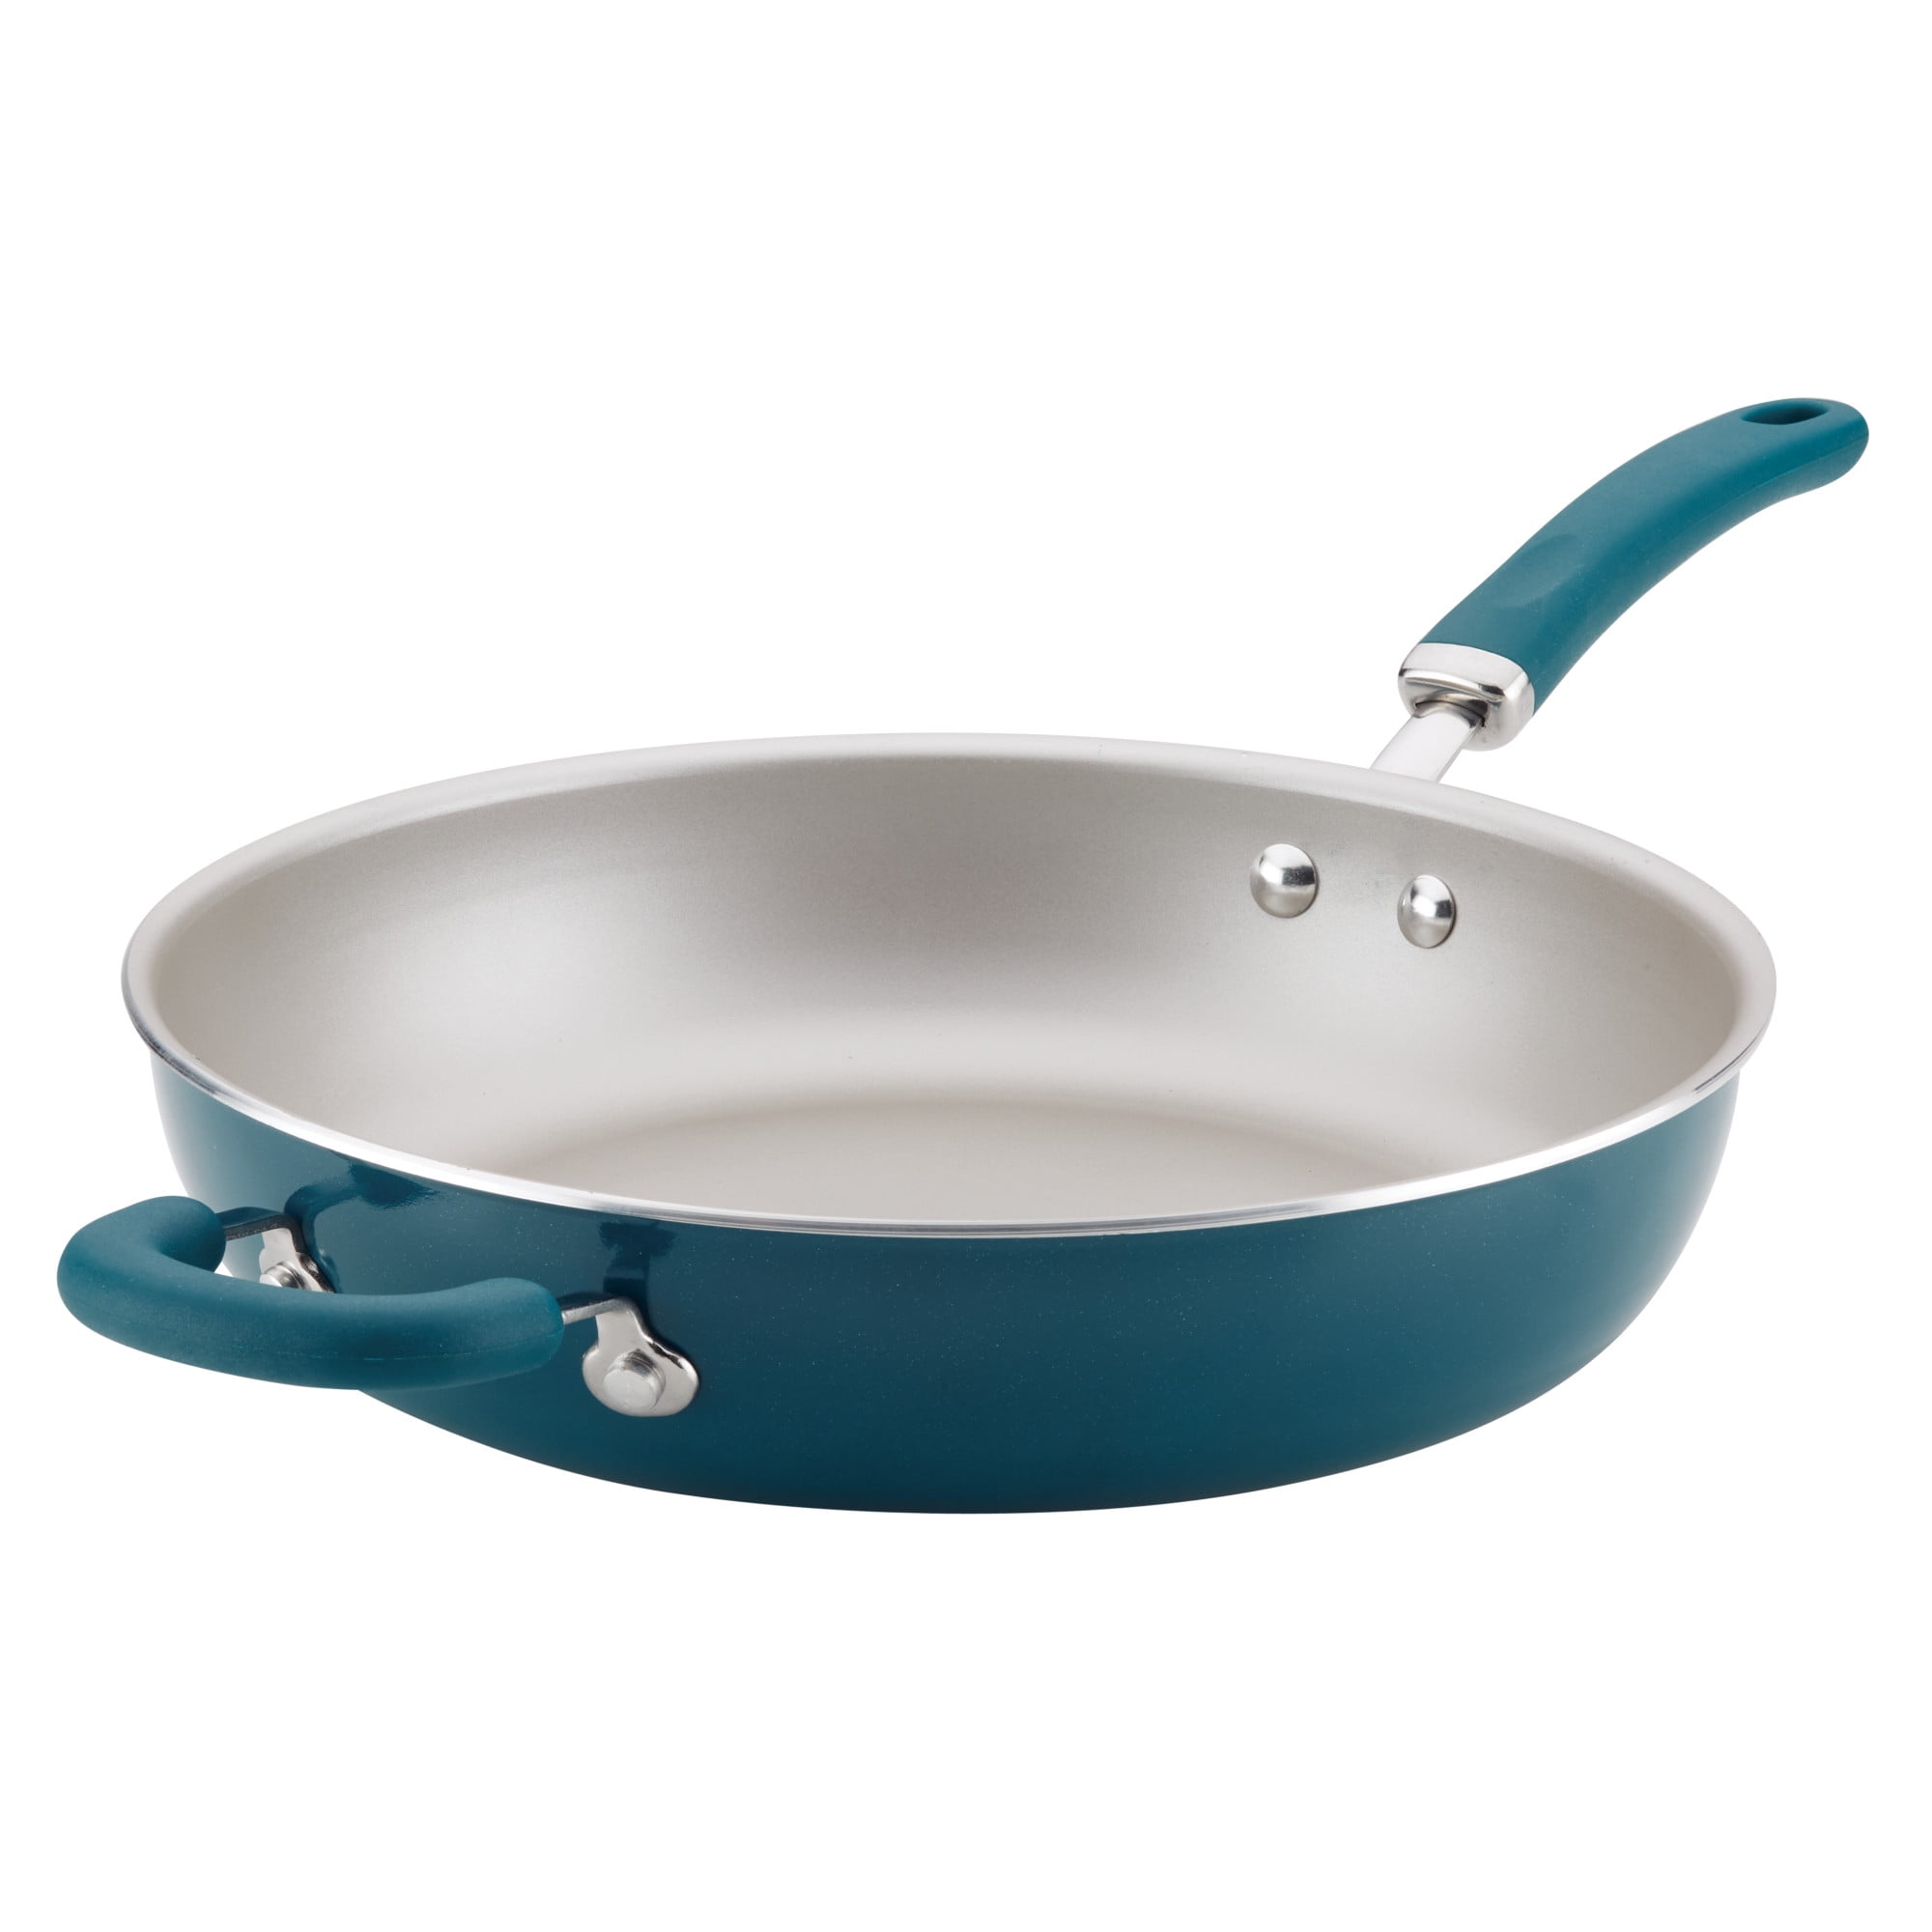 Bring Home the Best Deep Frying Pan